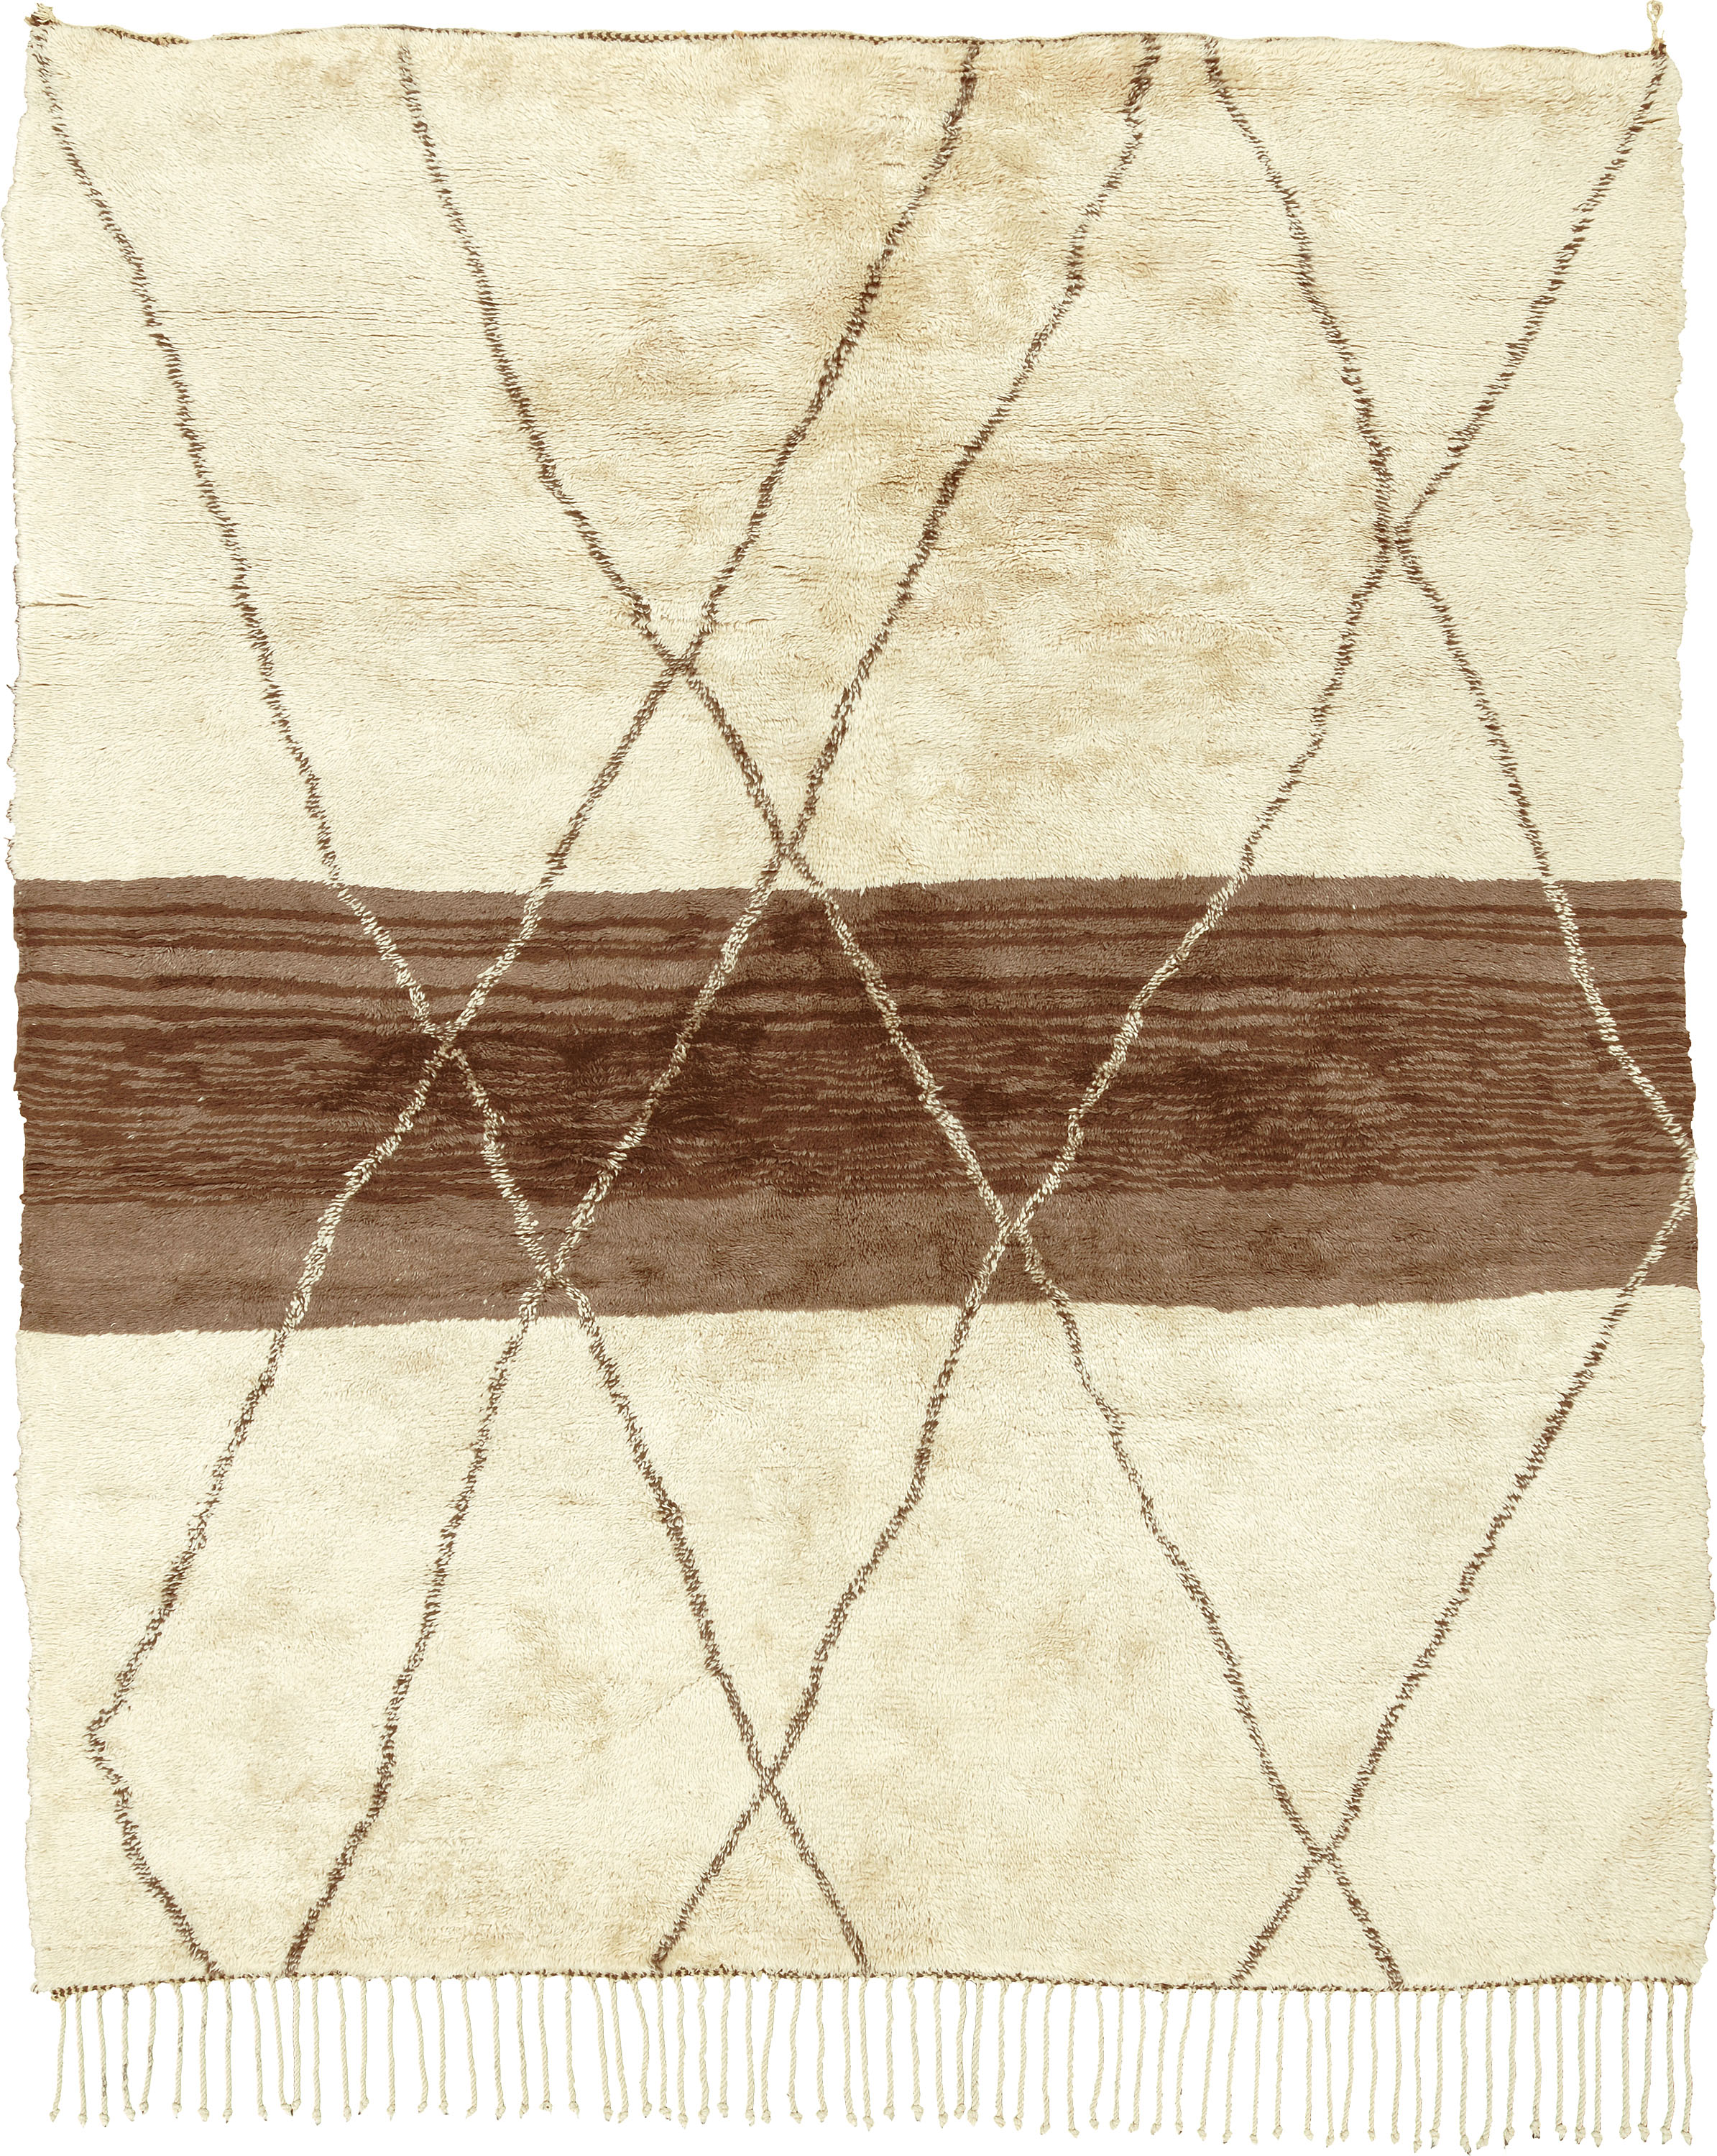 Beni Ourain Design | Custom Moroccan Carpet | Ref #15173 | FJ Hakimian | Carpet Gallery in NY